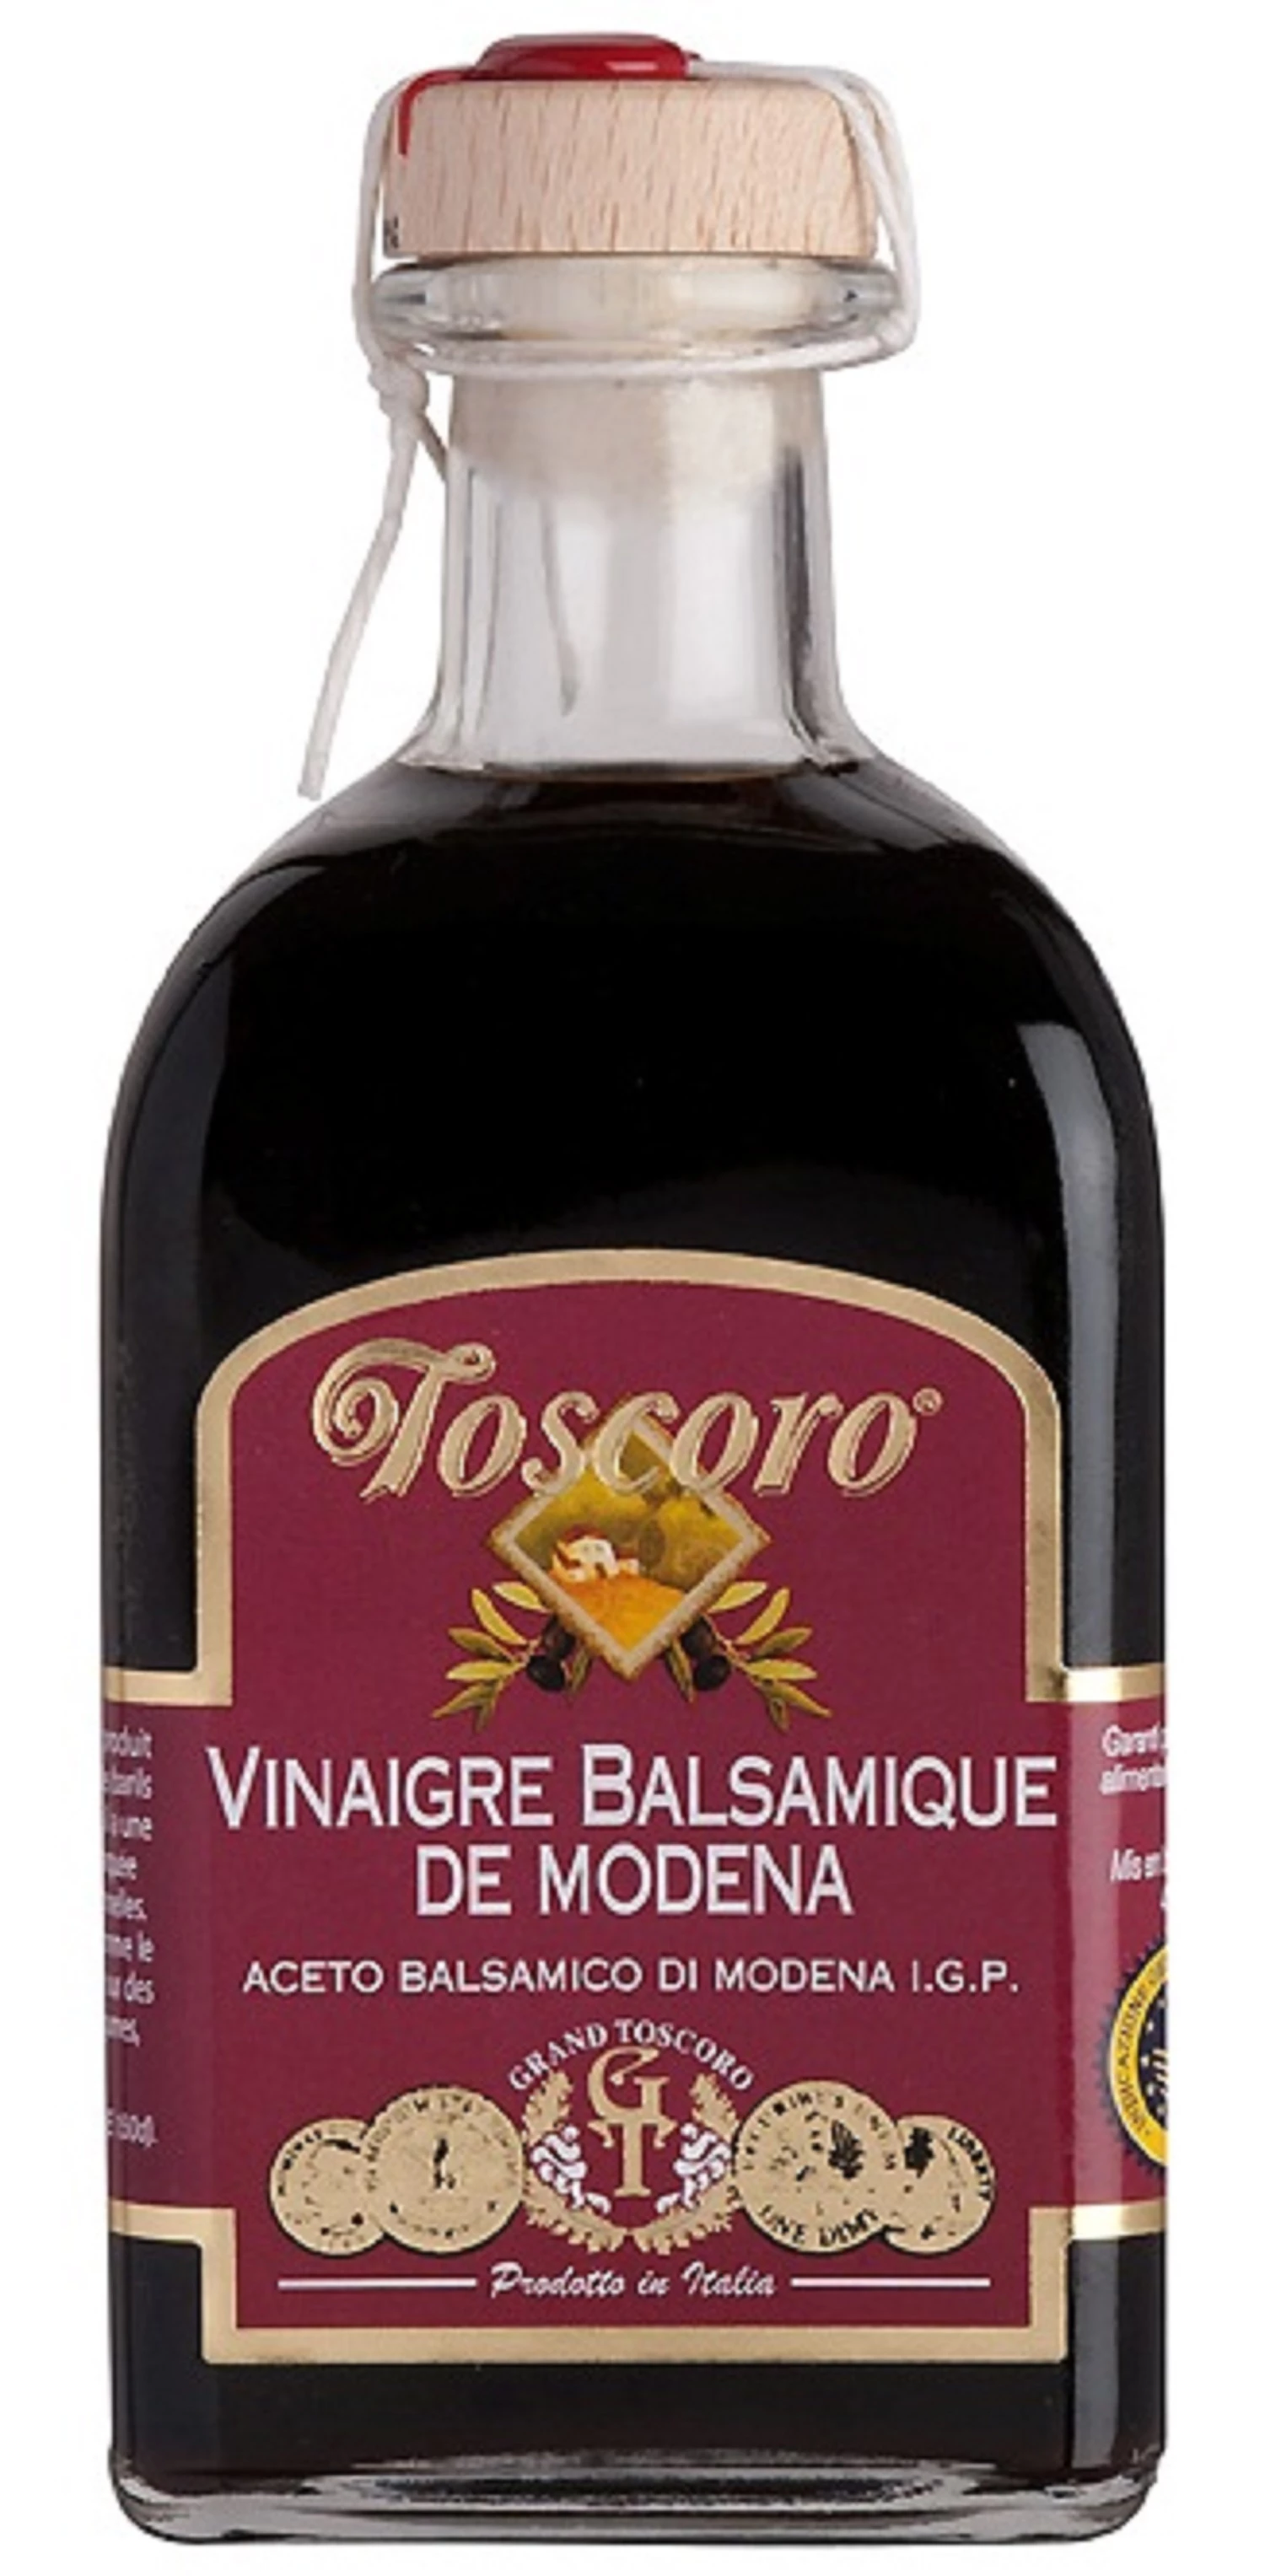 Balsamic vinegar of modena - TOSCORO